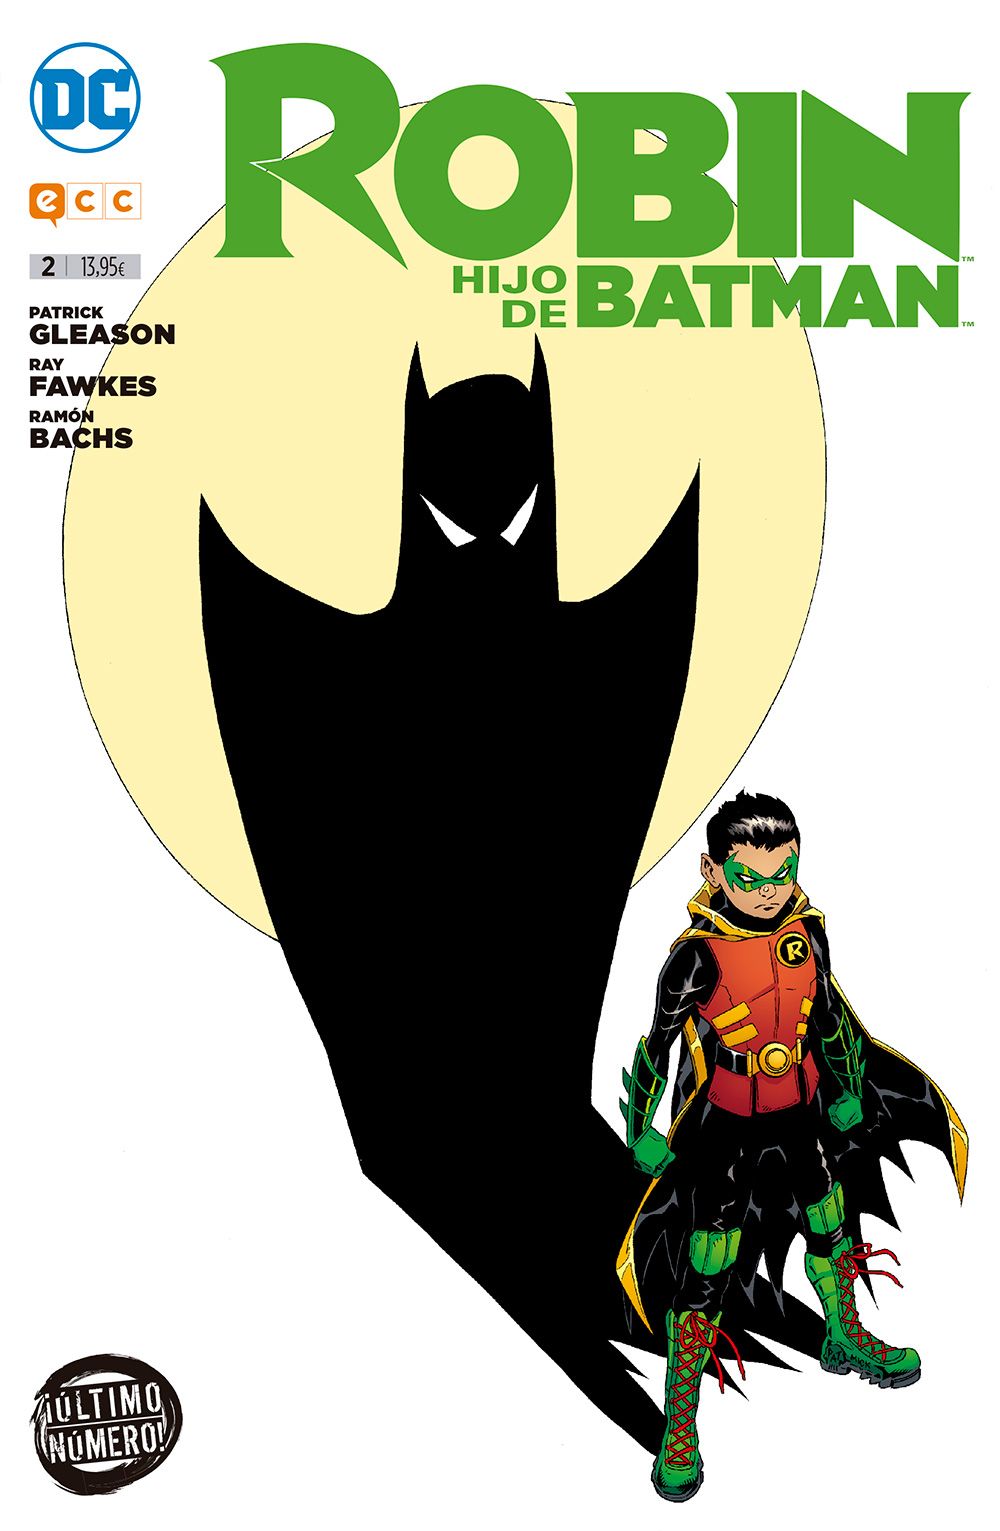 “Robin, Hijo de Batman #2” (Ray Fawkes, Patrick Gleason y Ramón F. Bachs, ECC)